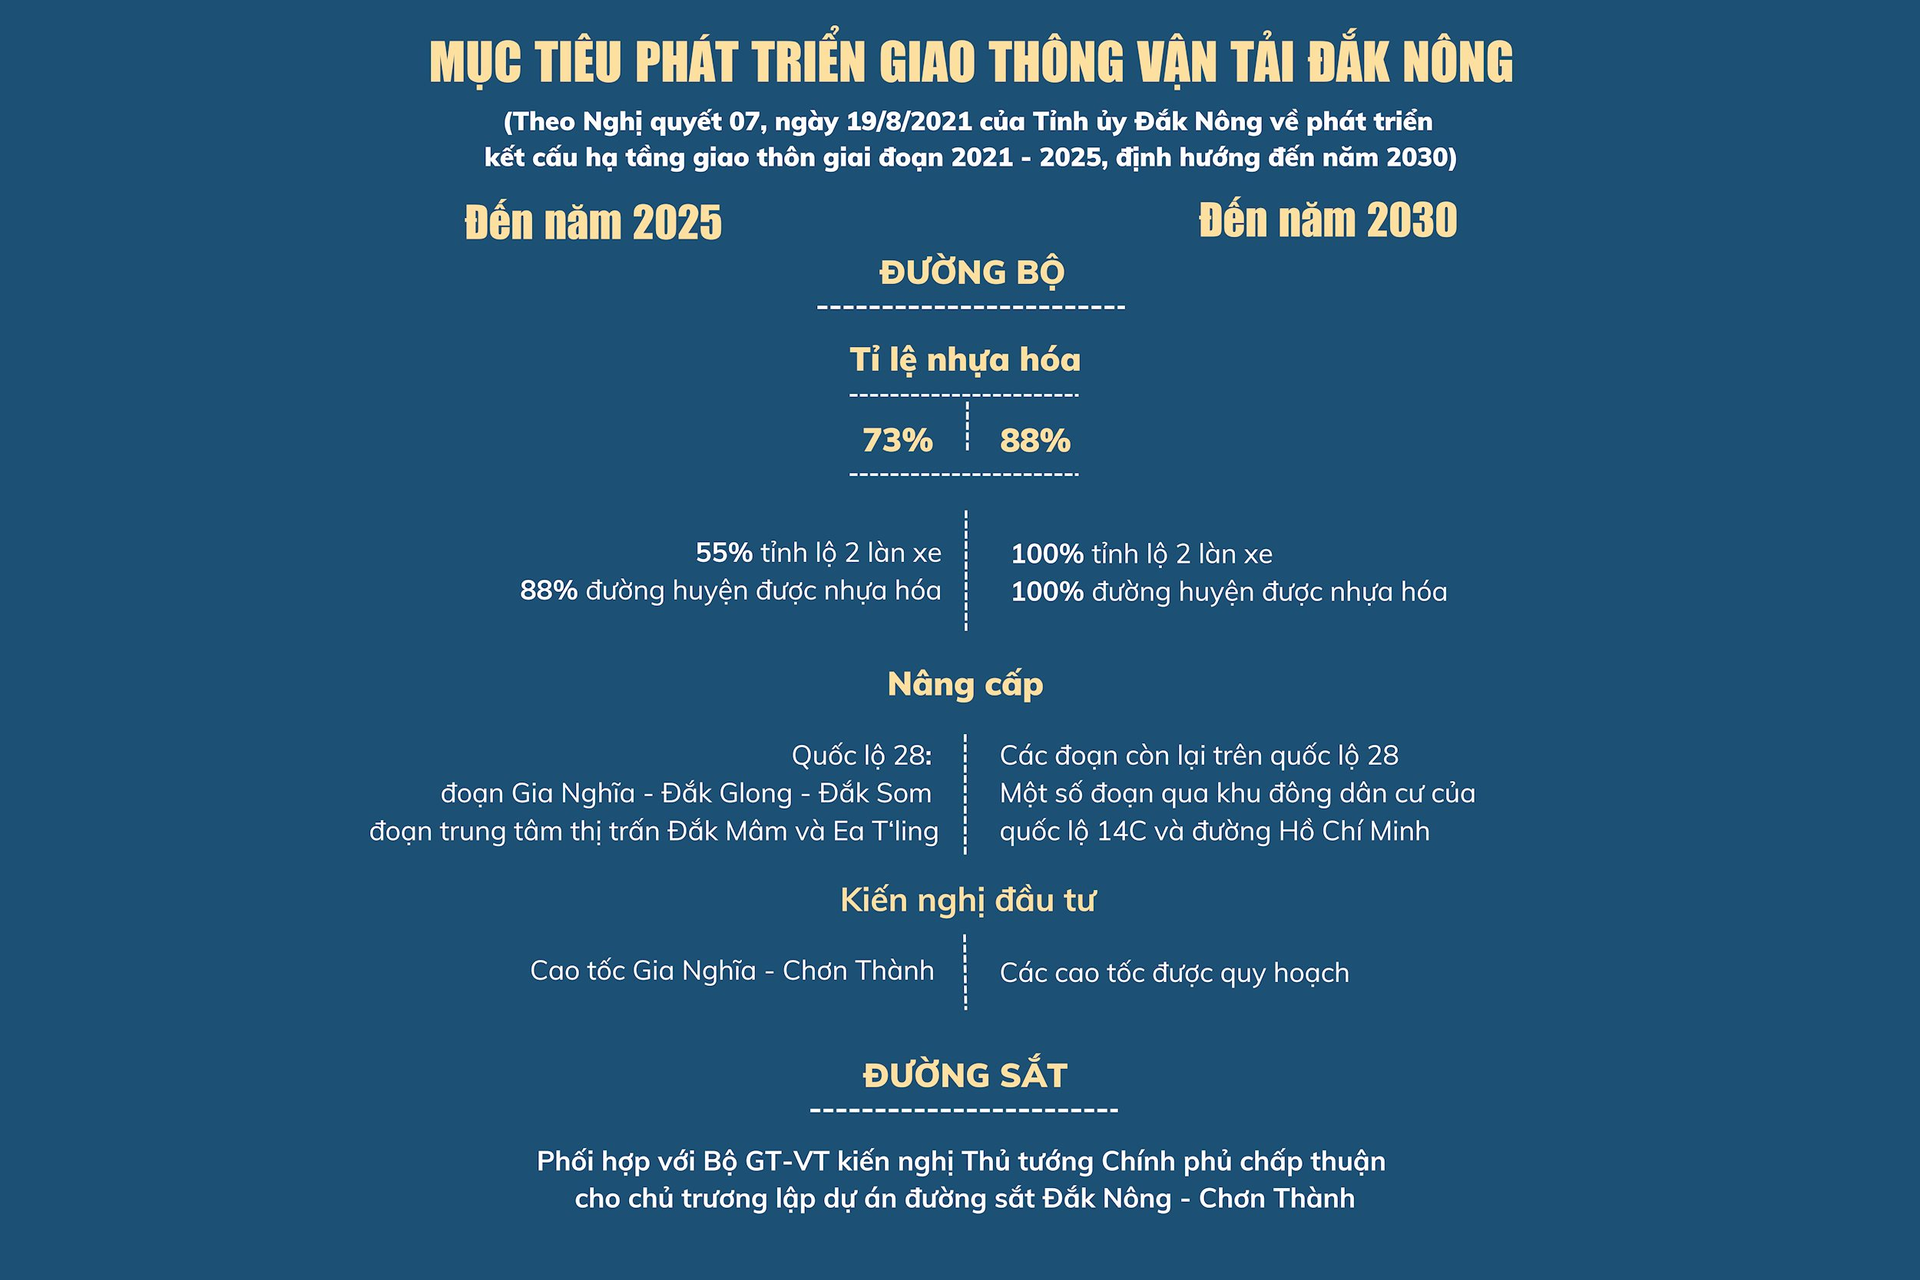 ha-tang-giao-thong-van-tai-dak-nong-nam-2023-3000-x-2000-px-1-.png